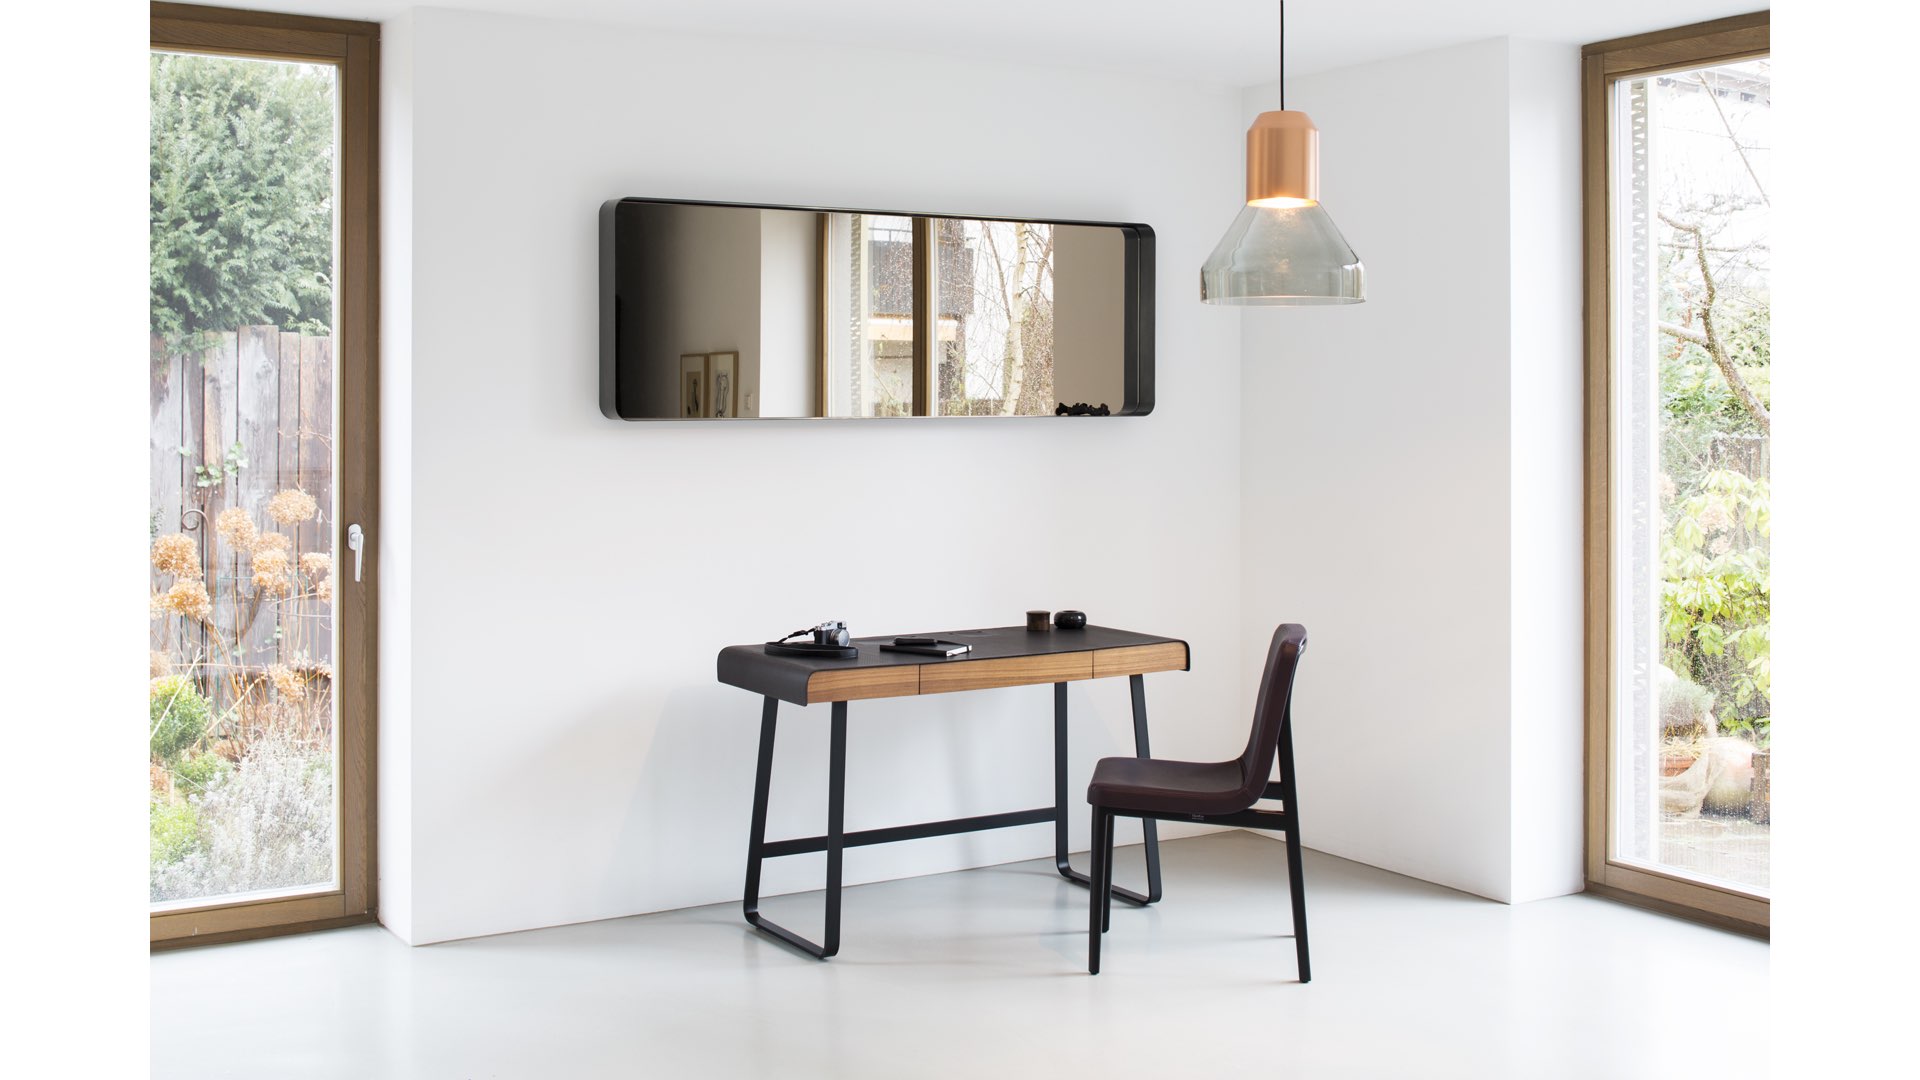 classicon-hassos-cypris-mirror-pegasus-home-desk-sedan-chair-bell-light-ambiente